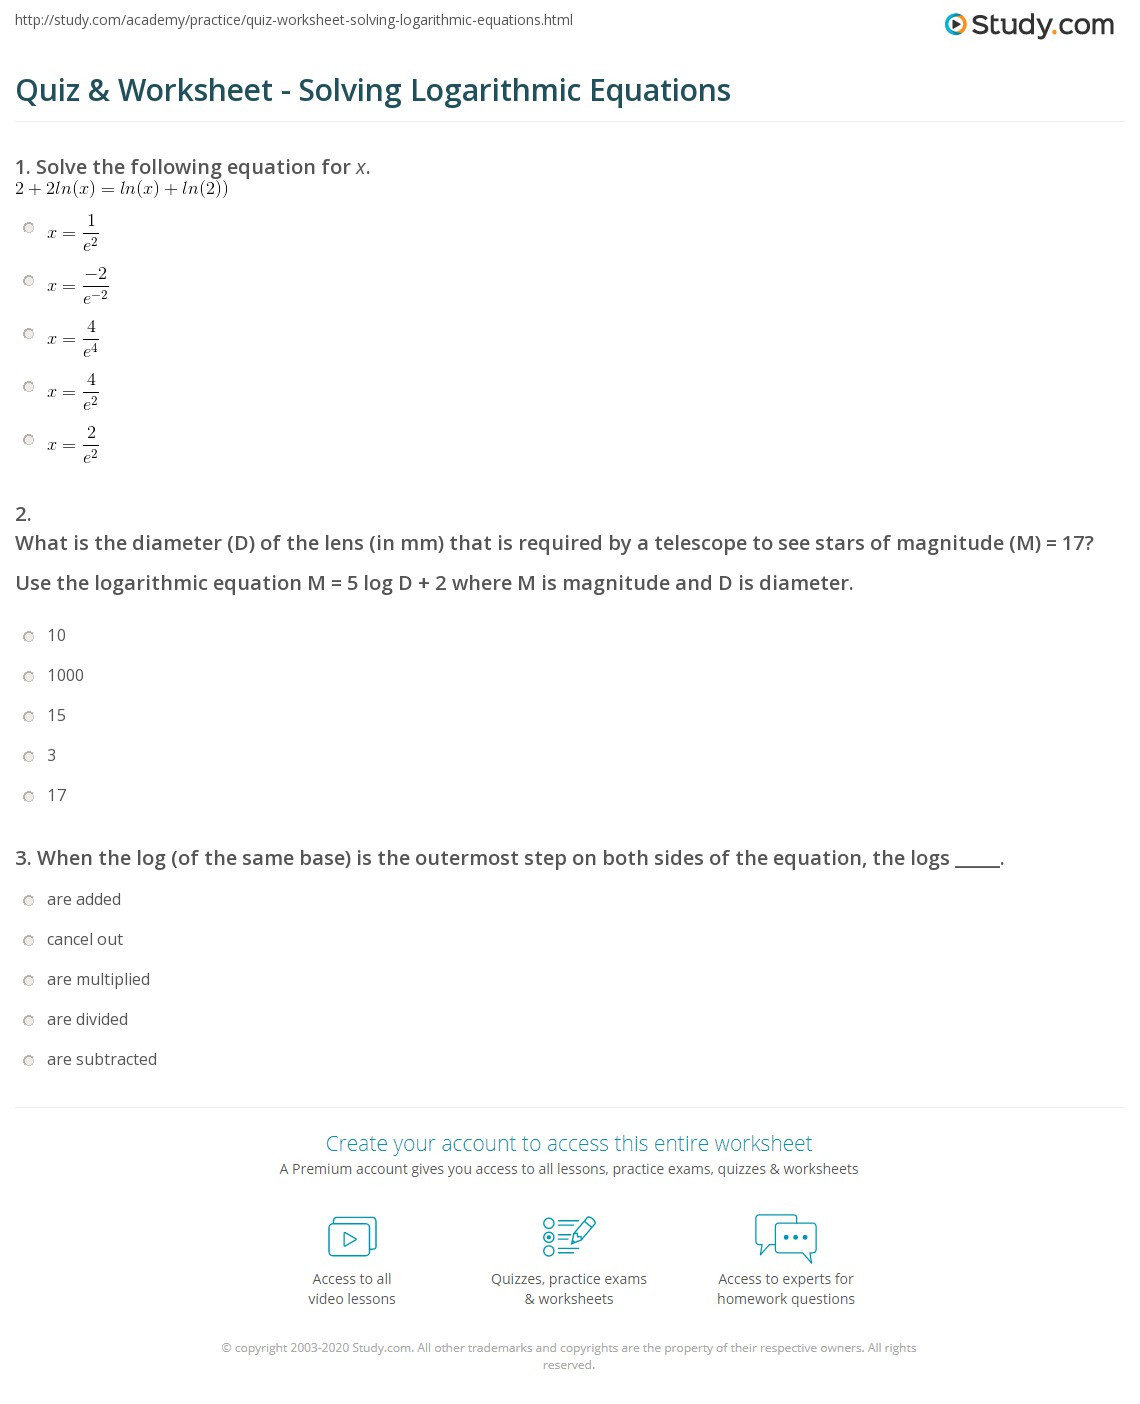 Solving Logarithmic Equations Worksheet Quiz &amp; Worksheet solving Logarithmic Equations